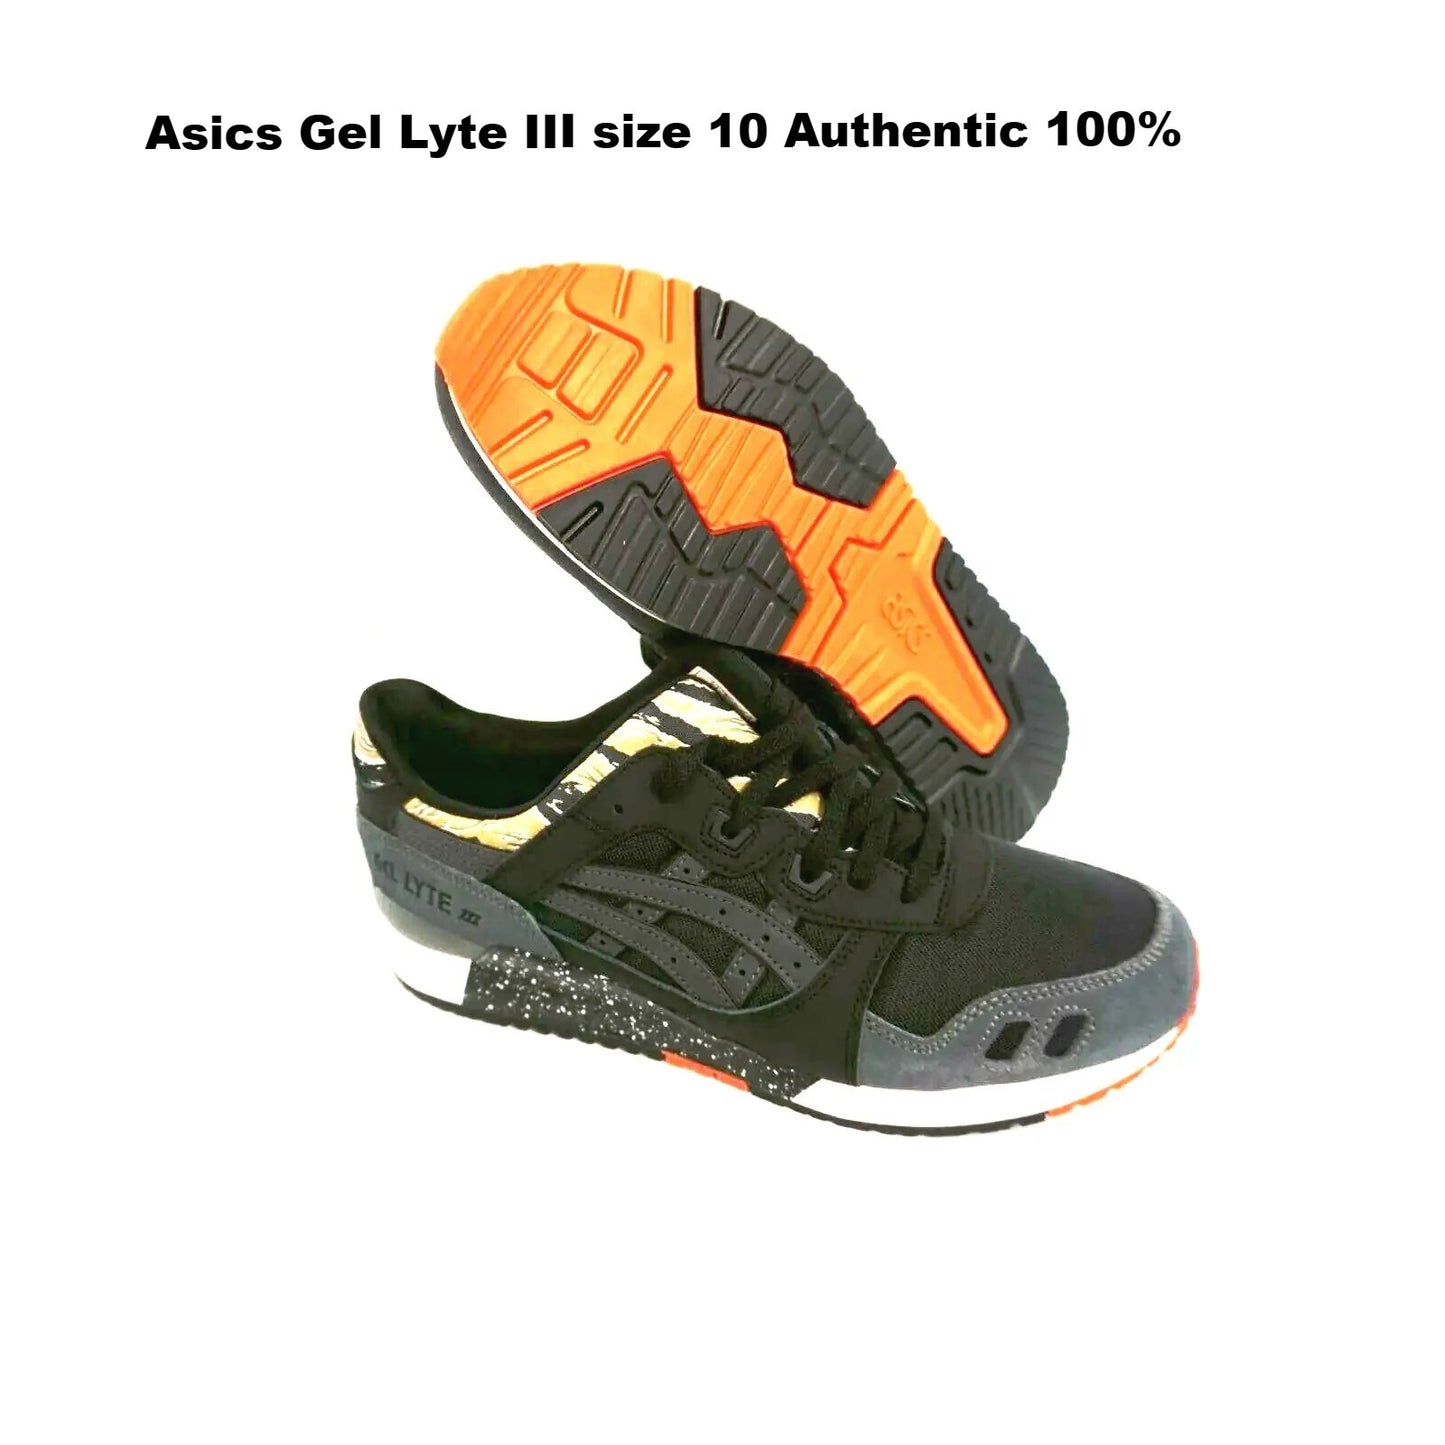 Asics mens gel lyte iii running shoes tiger black orange size 10 us